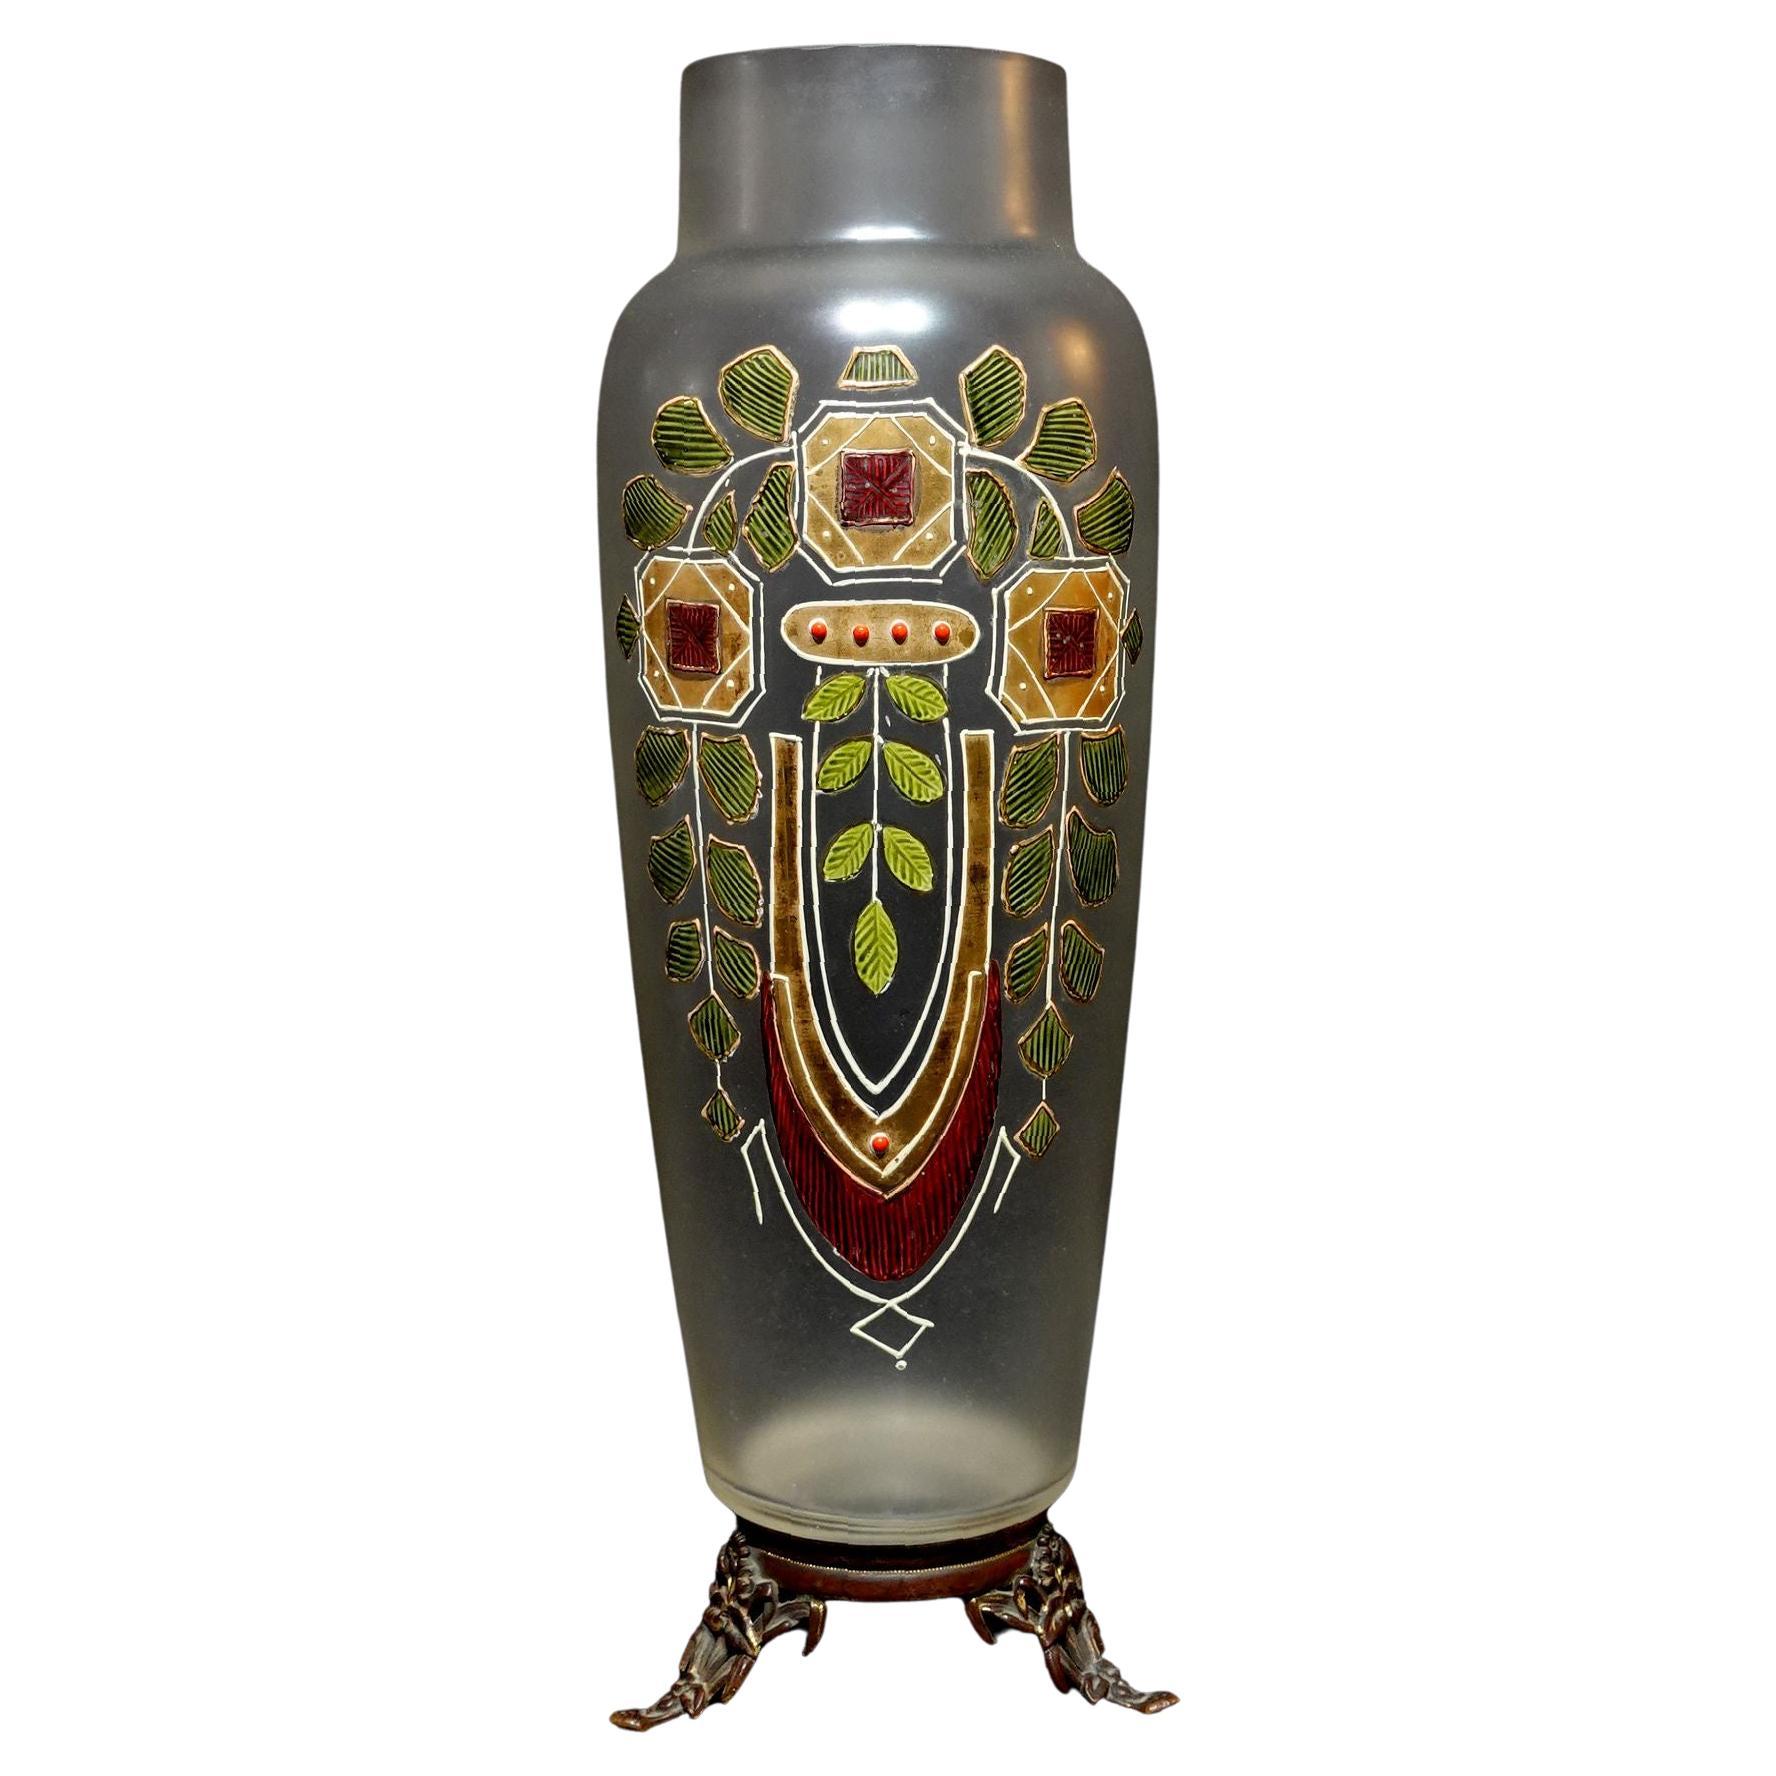 A Large Art Nouveau Enameled and Gilt Art Glass Vase For Sale